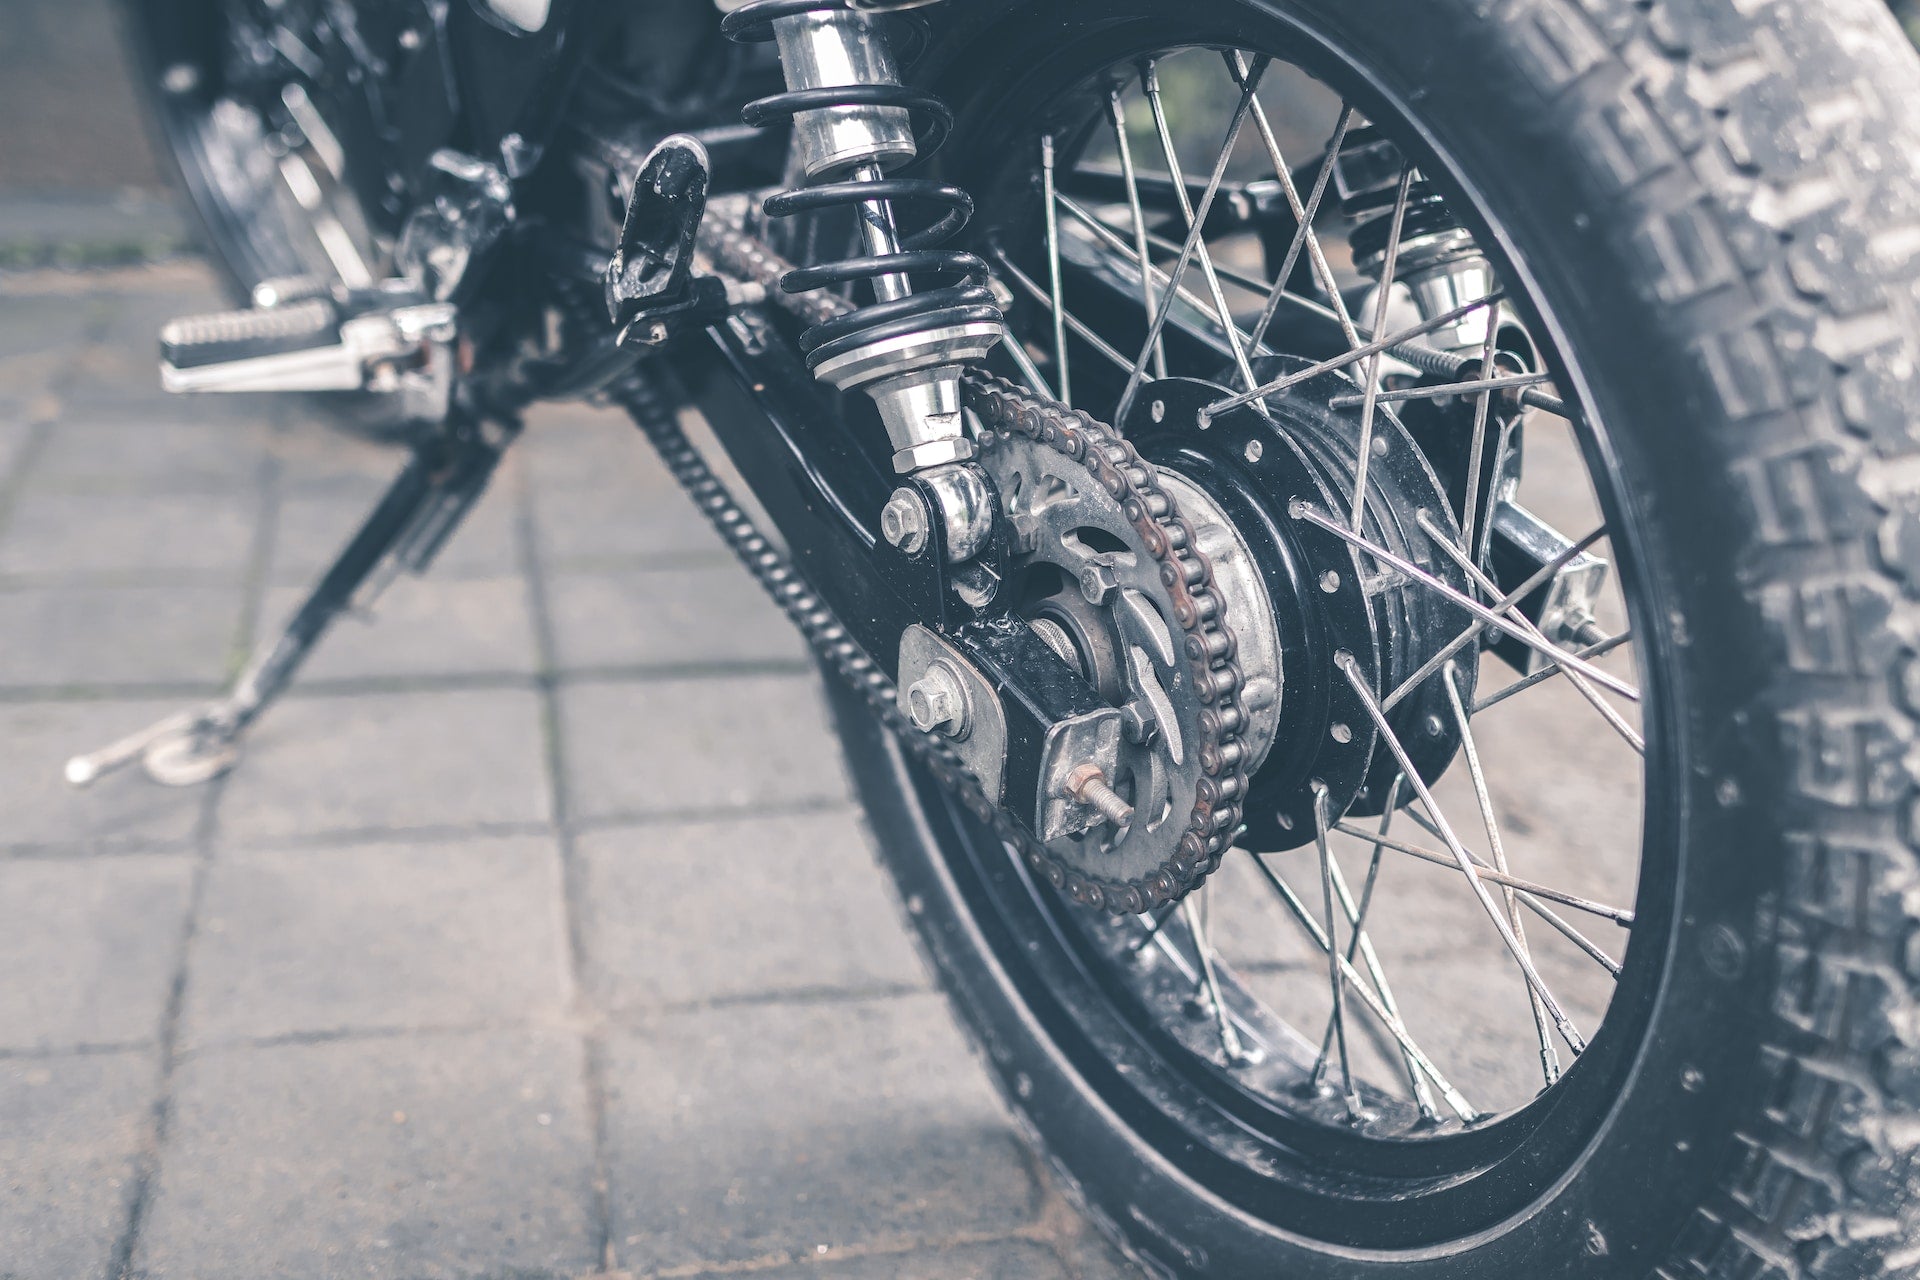 Pre Ride Motorcycle Maintenance Check